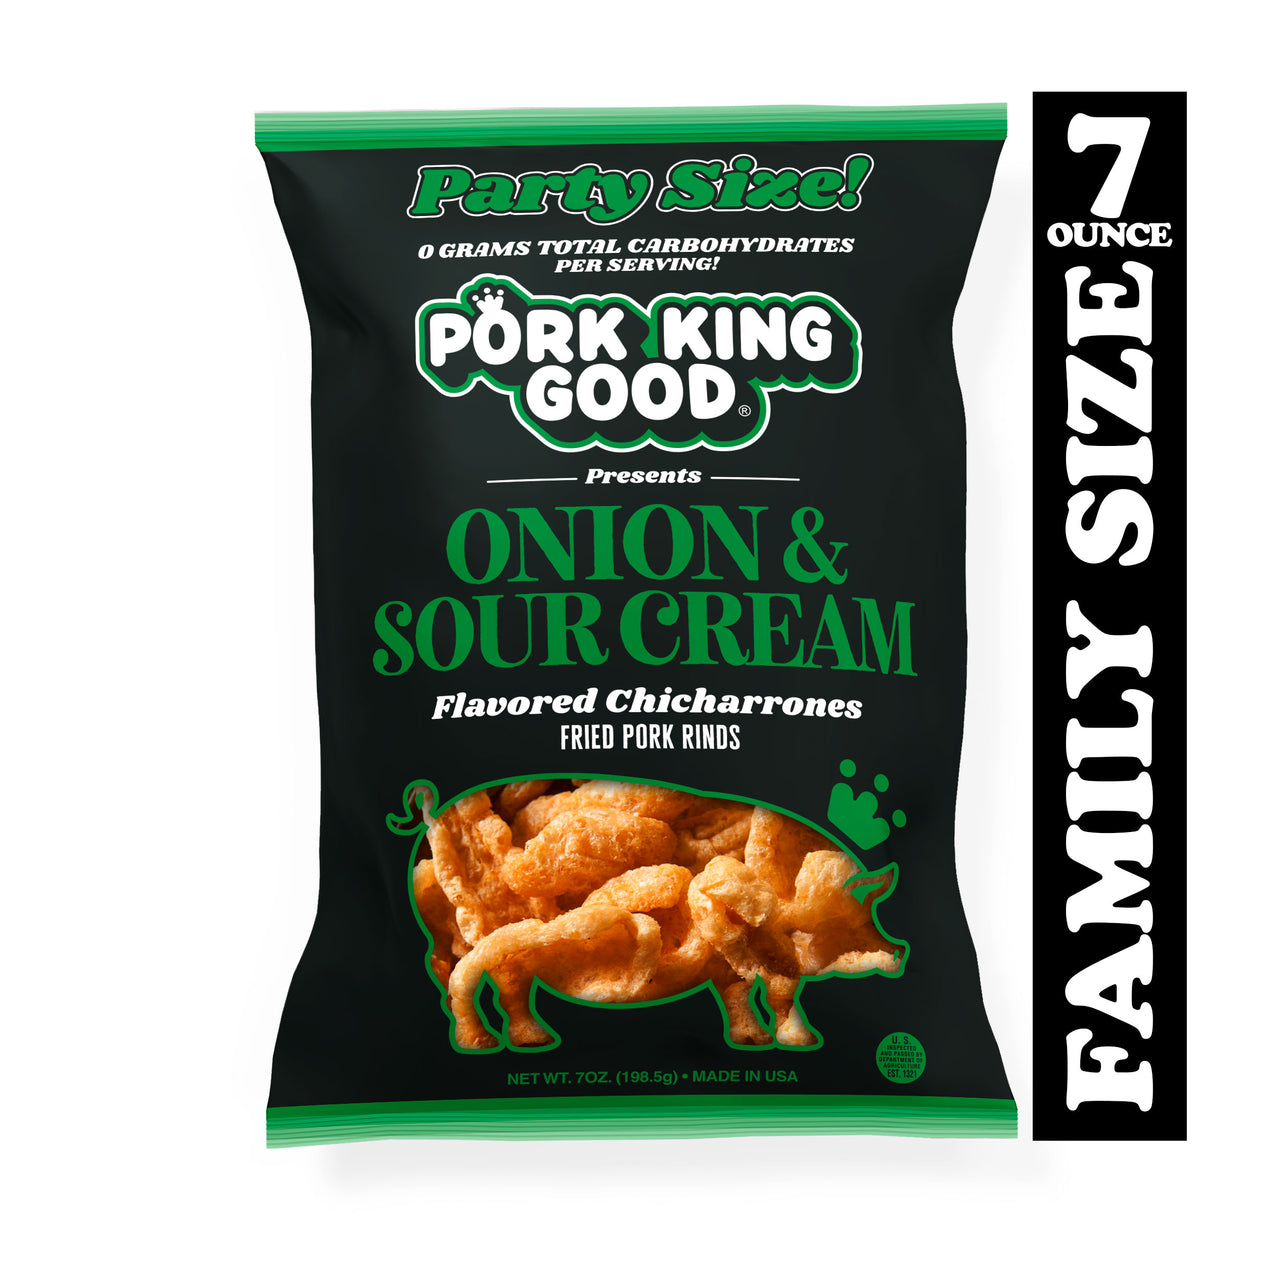 Pork King Good Onion & Sour Cream Pork Rinds 7oz Party Size Bag